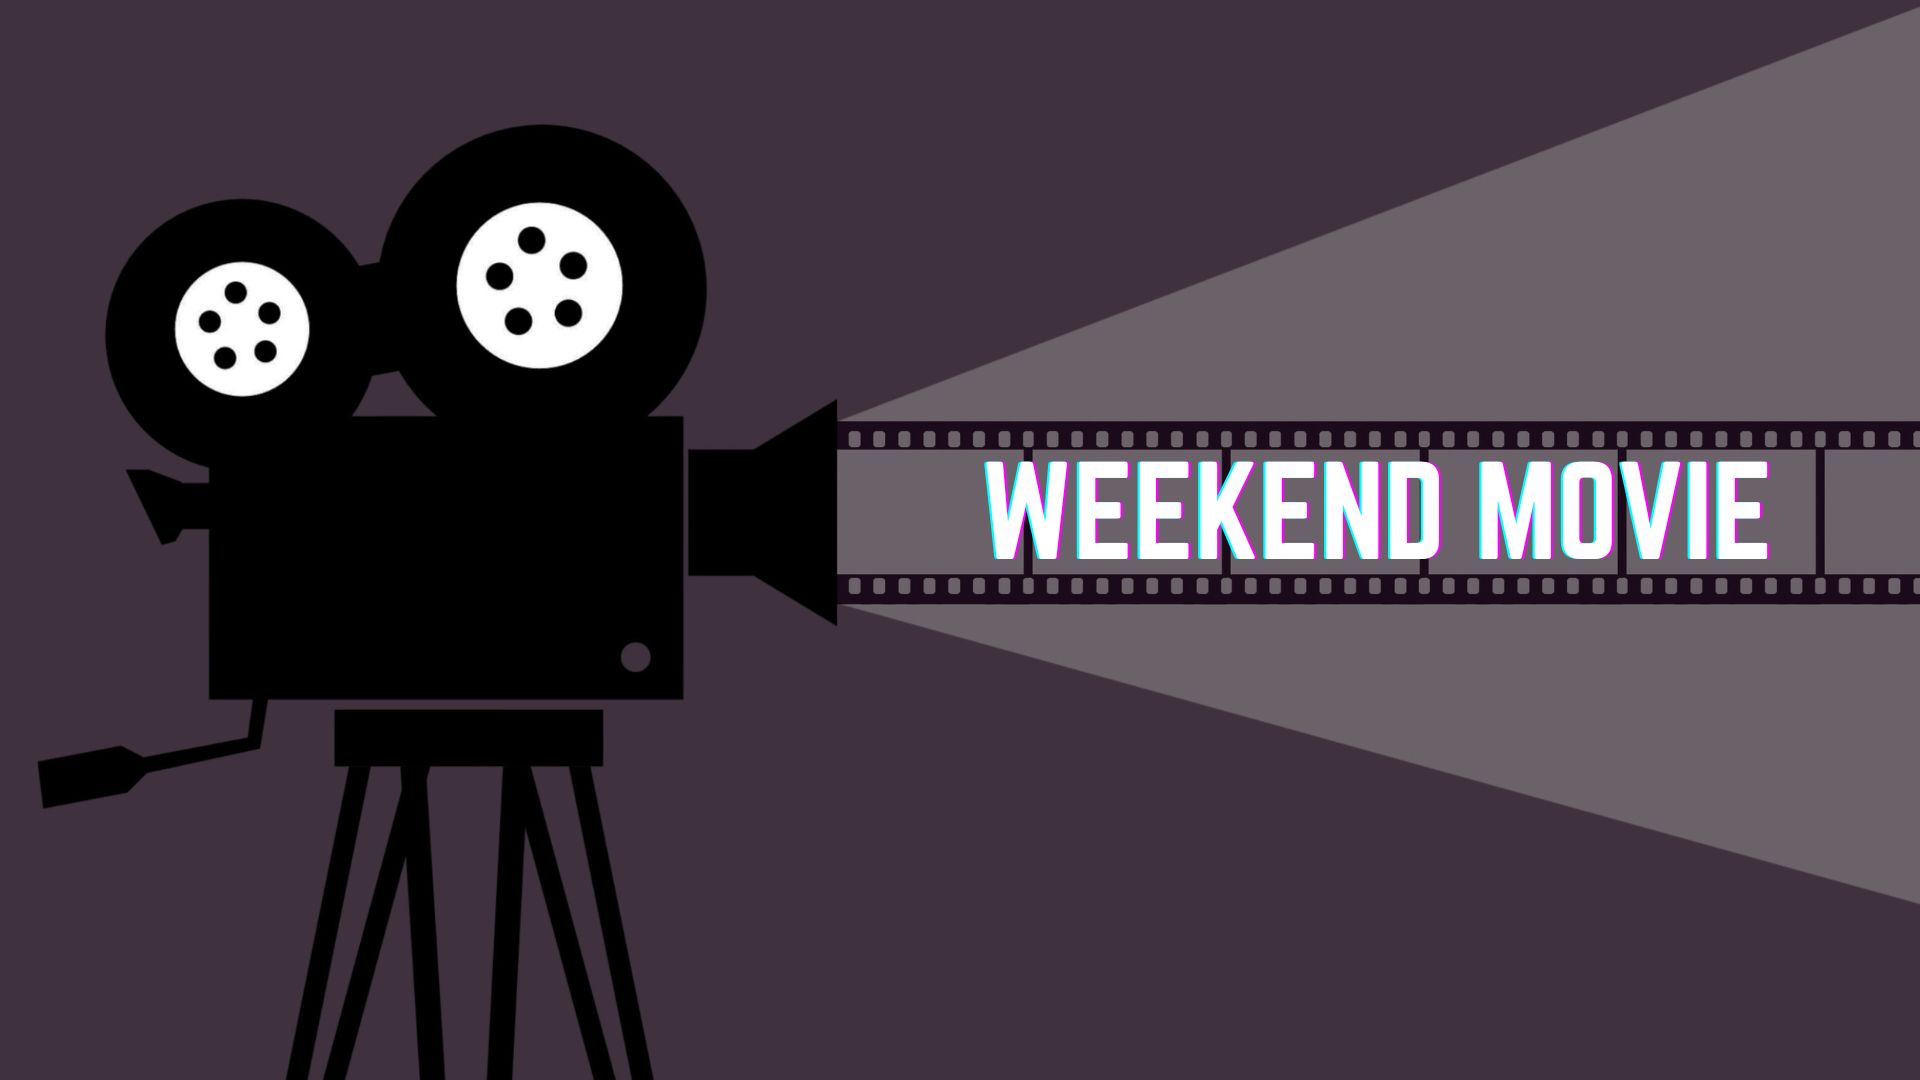 Weekend Movie banner